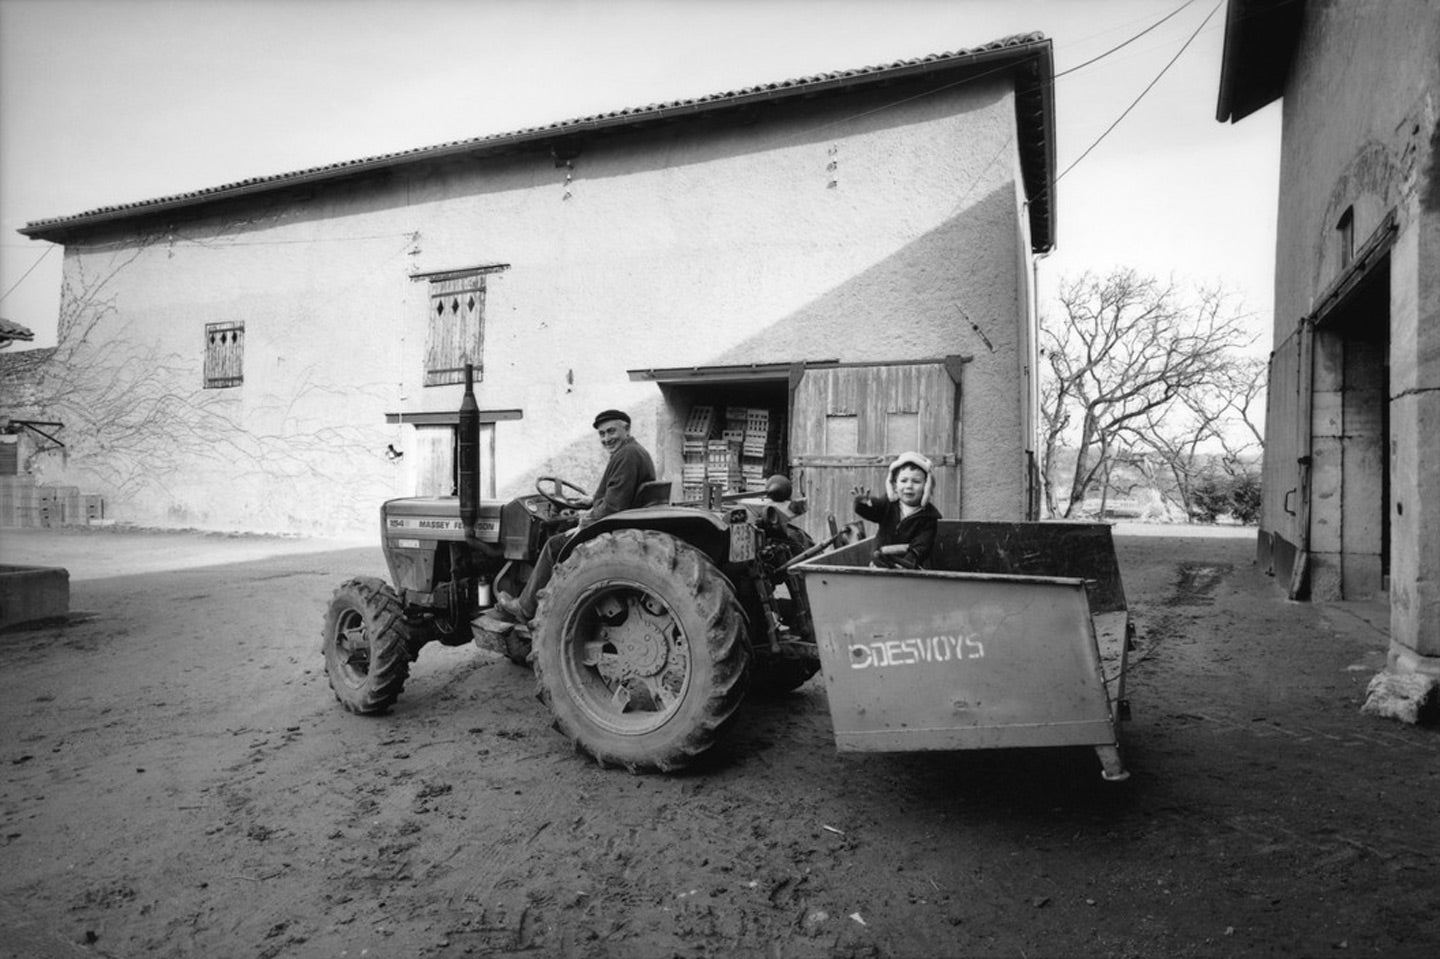 Raymond Depardon: La ferme du Garet (The Garet Farm)